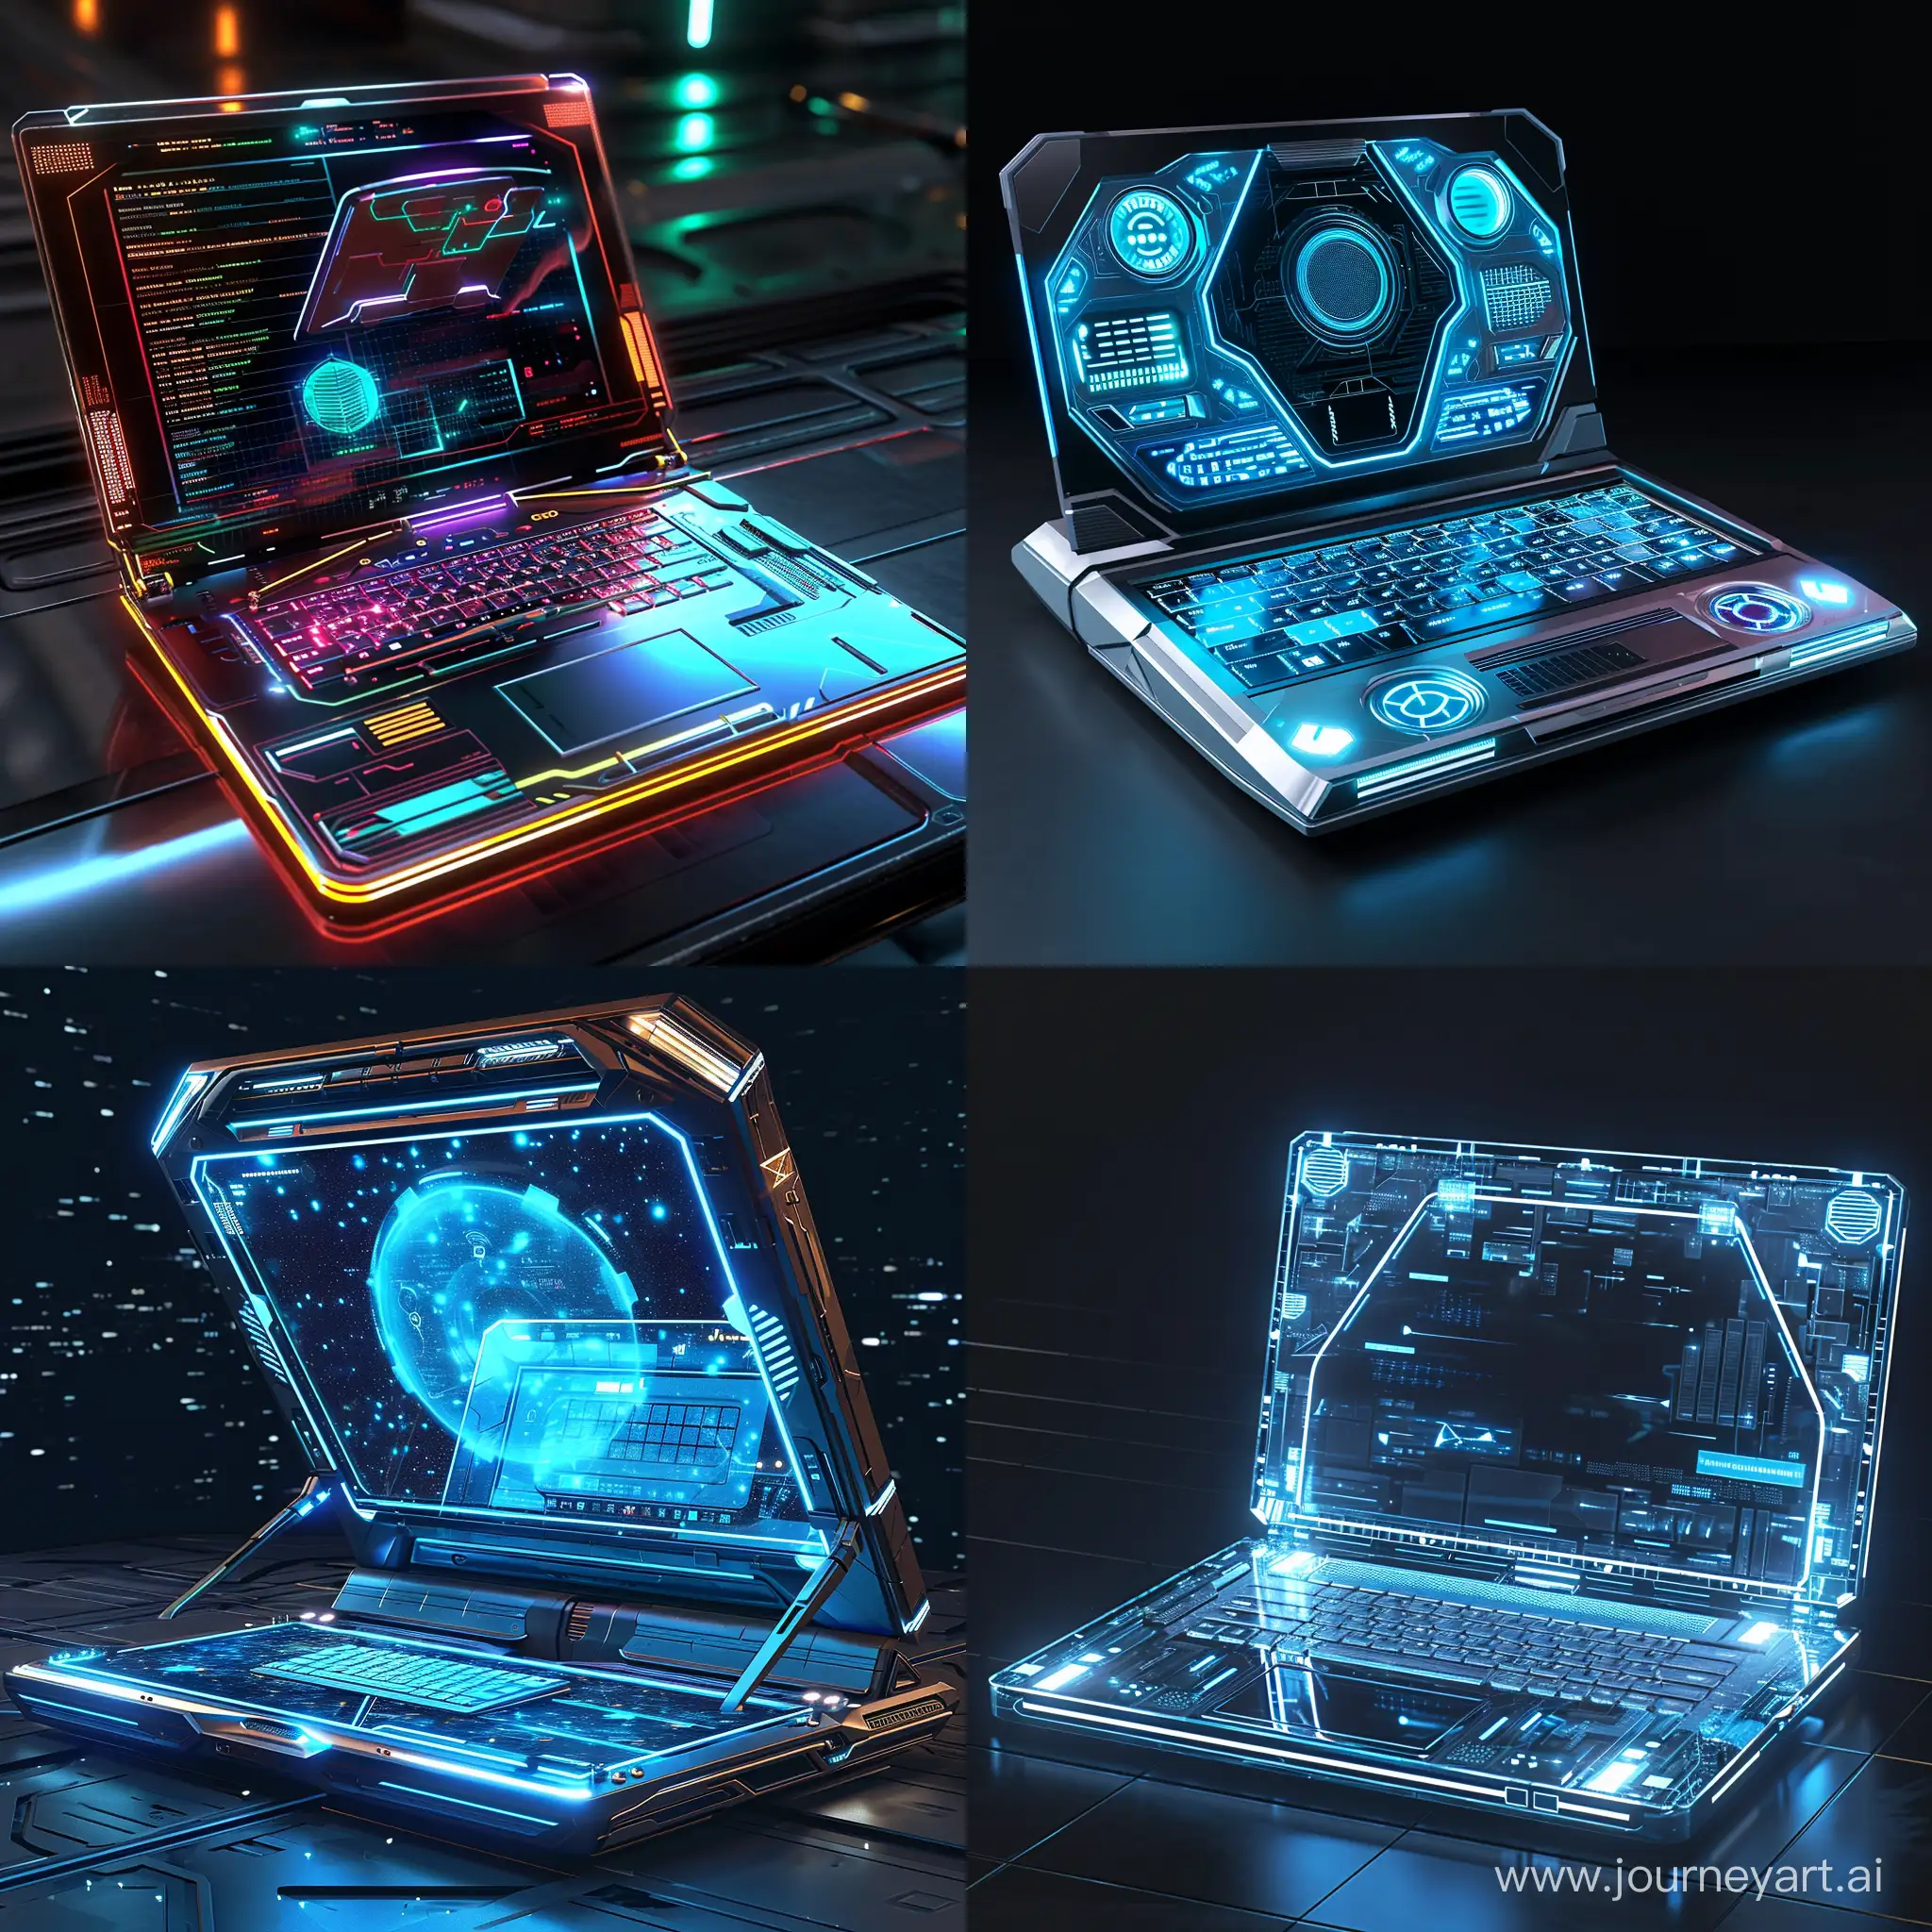 Futuristic-Laptop-in-2020s-Style-Trending-on-ArtStation-and-DeviantArt